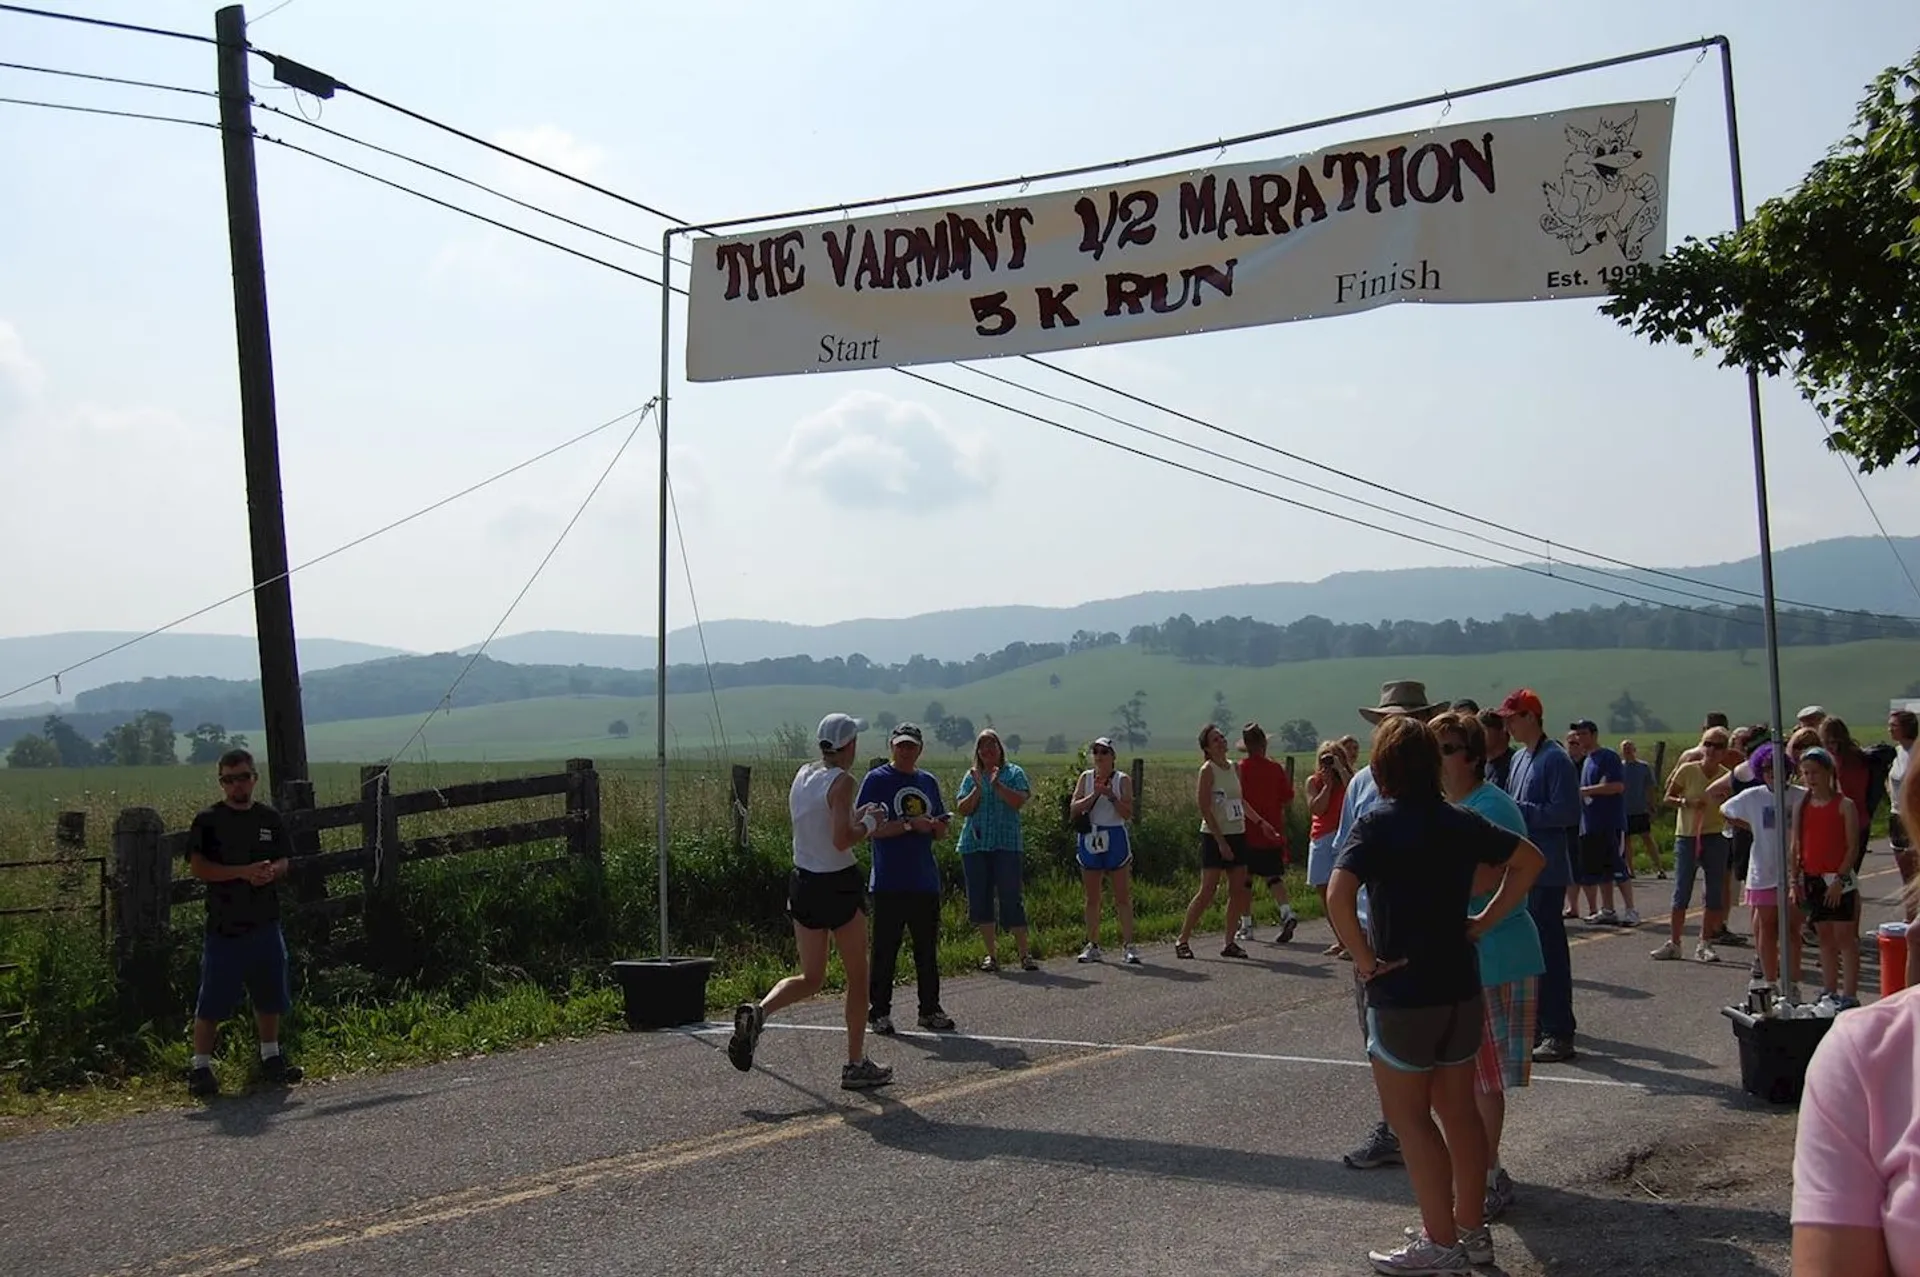 The Varmint 1/2 Marathon & 5K Run